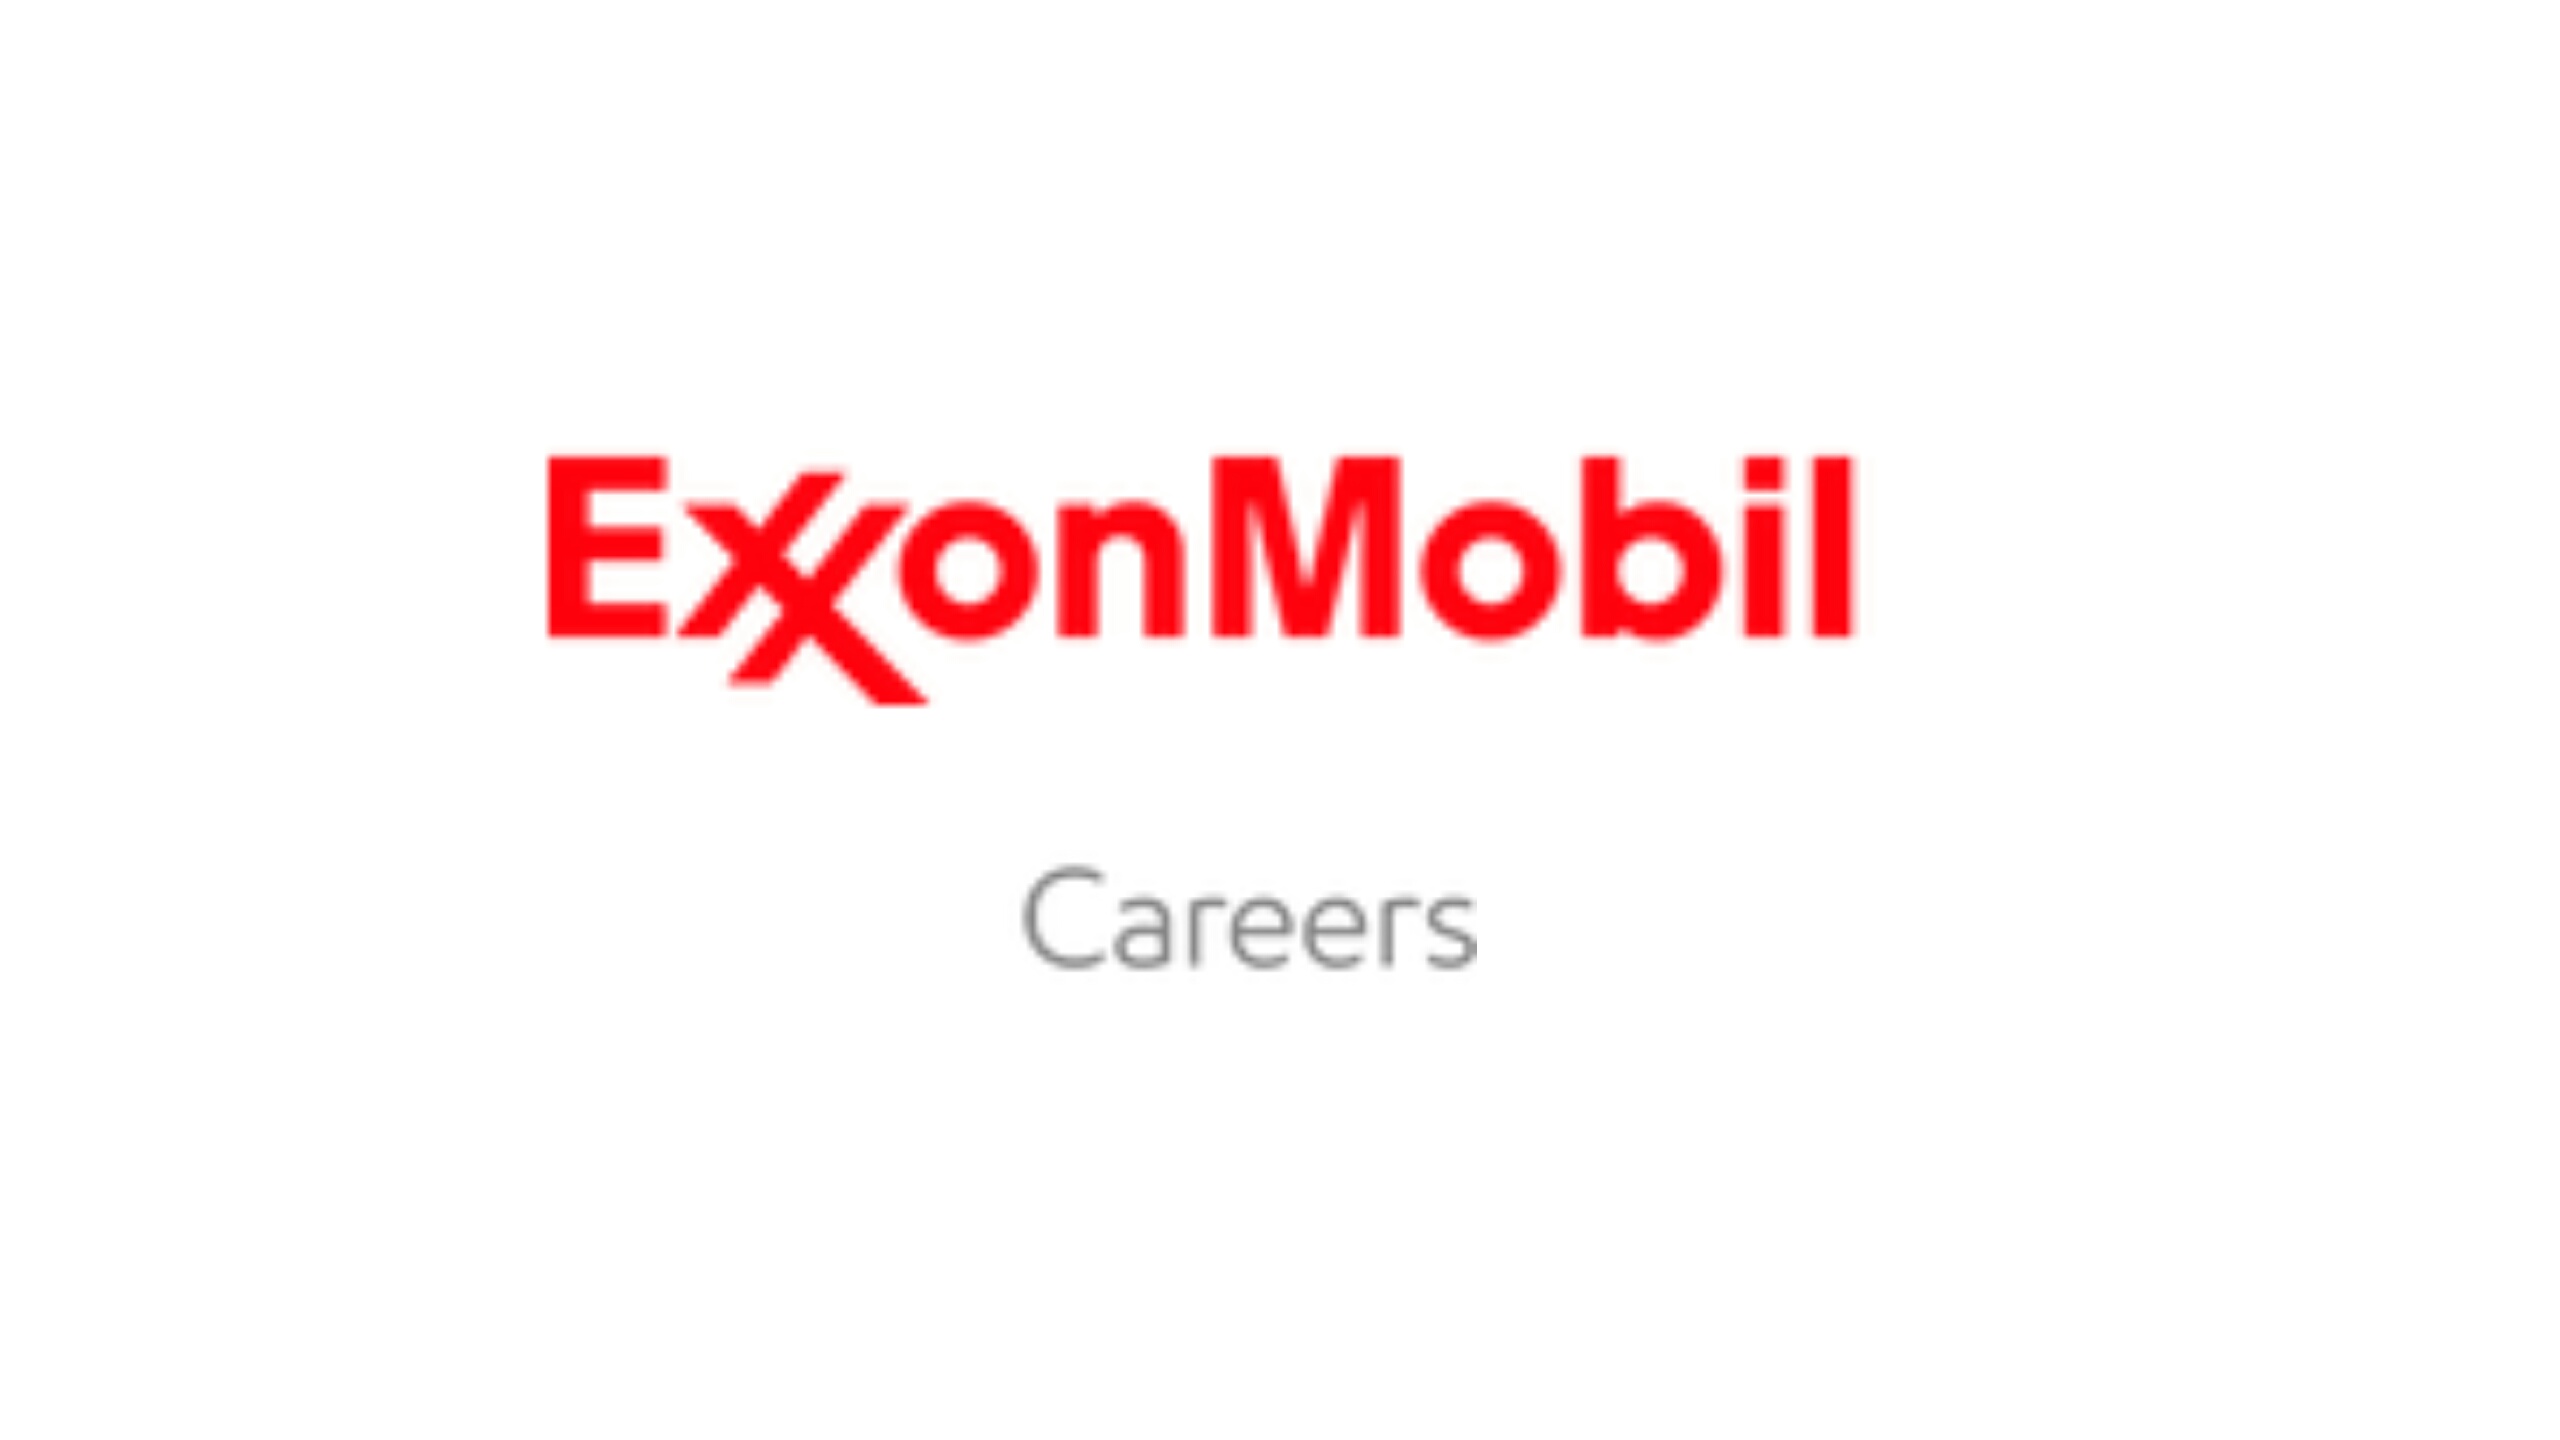 ExxonMobil Corporation Graduate Job Recruitment